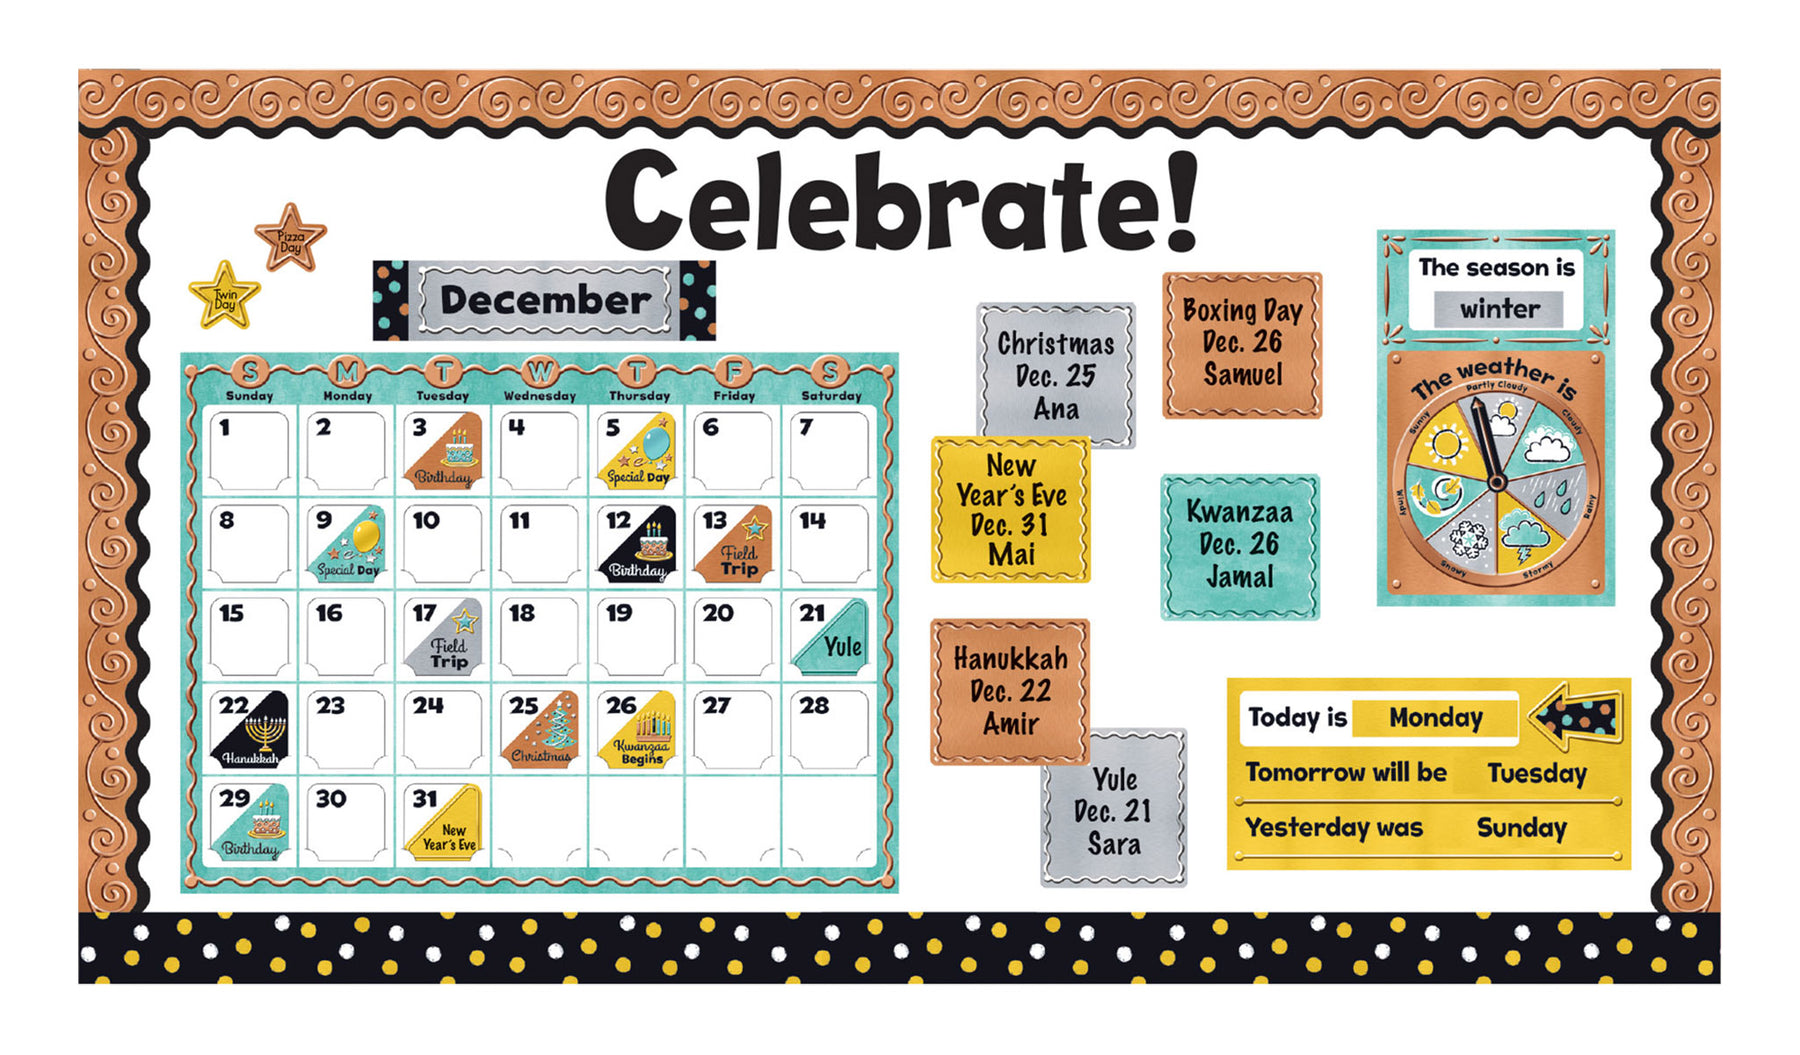 D8425 I ♥ Metal™ Calendar Celebrate! Bulletin Board Idea